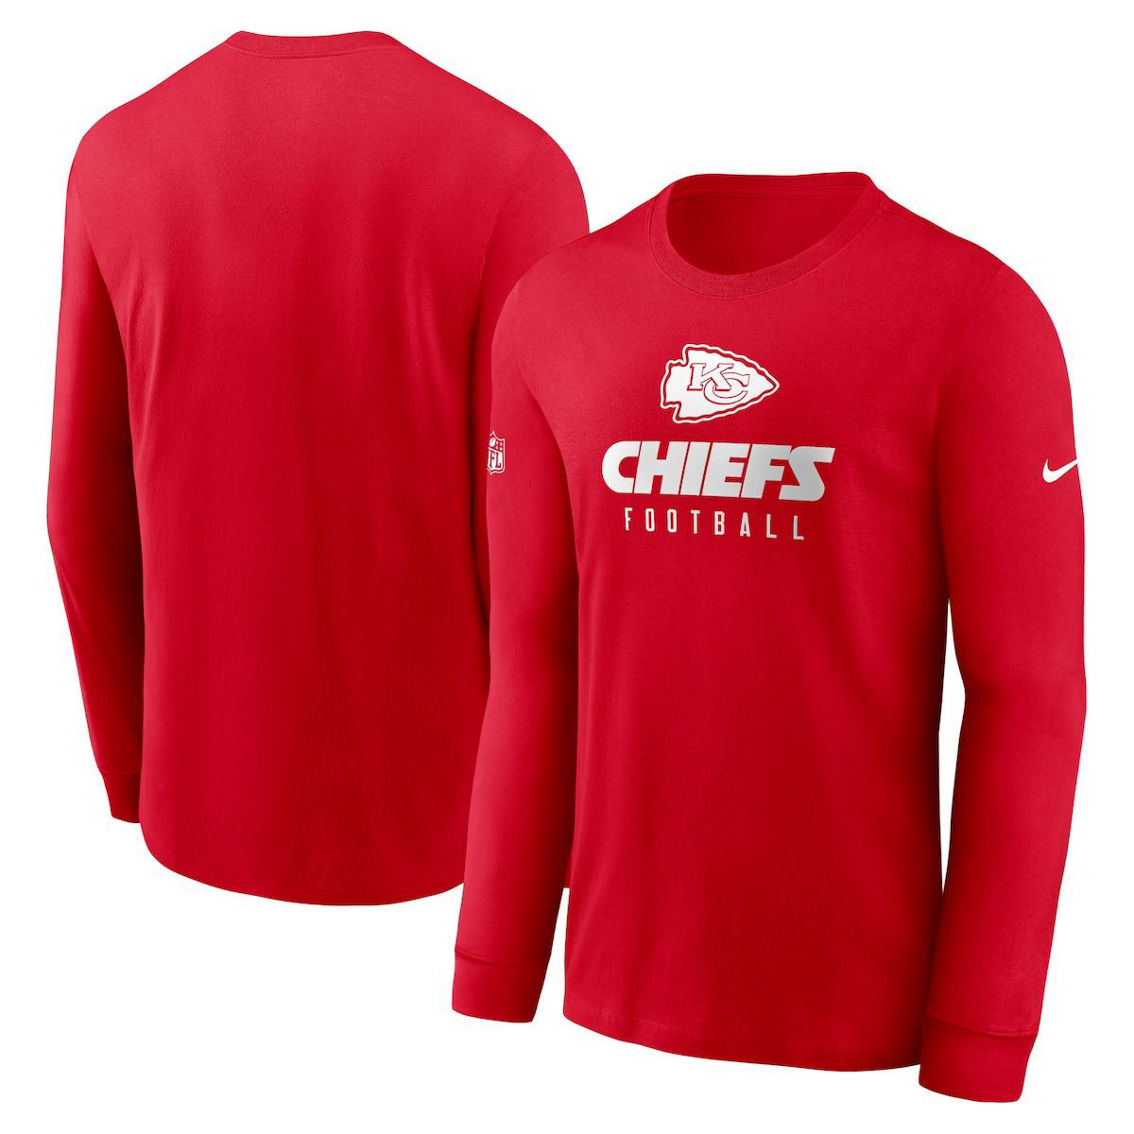 Nike Men's Red Kansas City Chiefs Sideline Performance Long Sleeve T-Shirt - Image 2 of 4